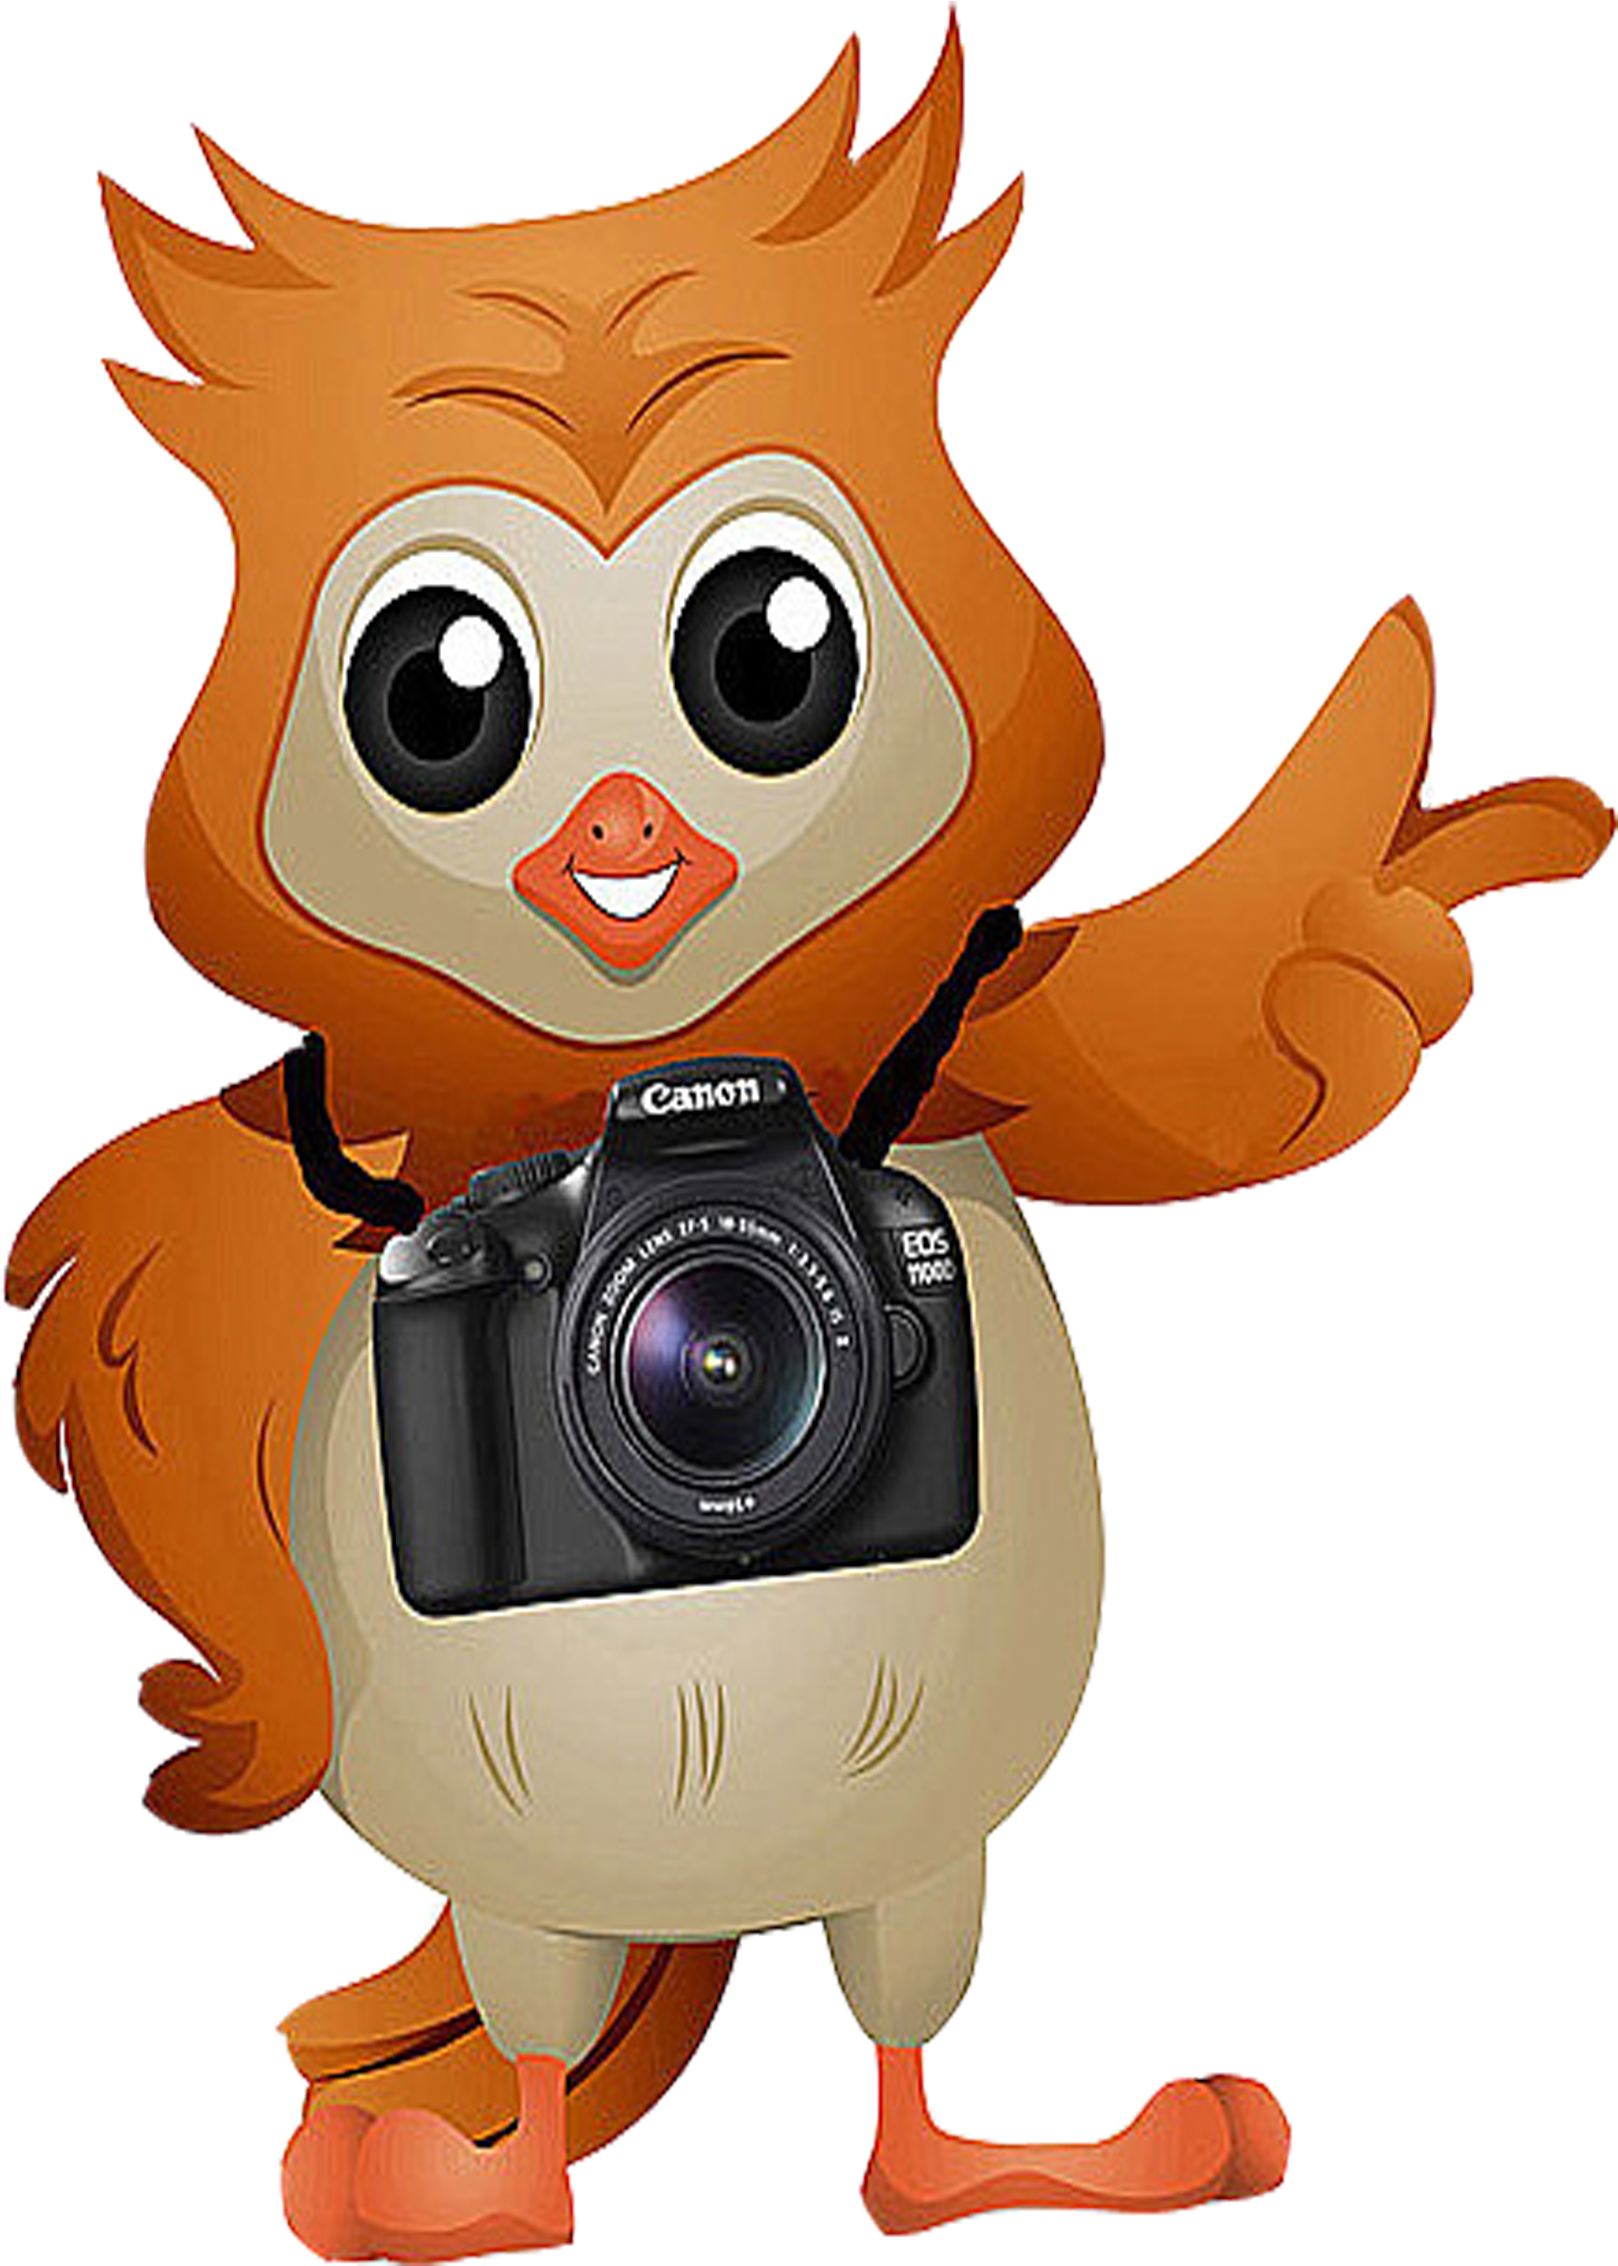 Camera Clipart Owl - Cartoon Owl With A Camera (1800x2700)